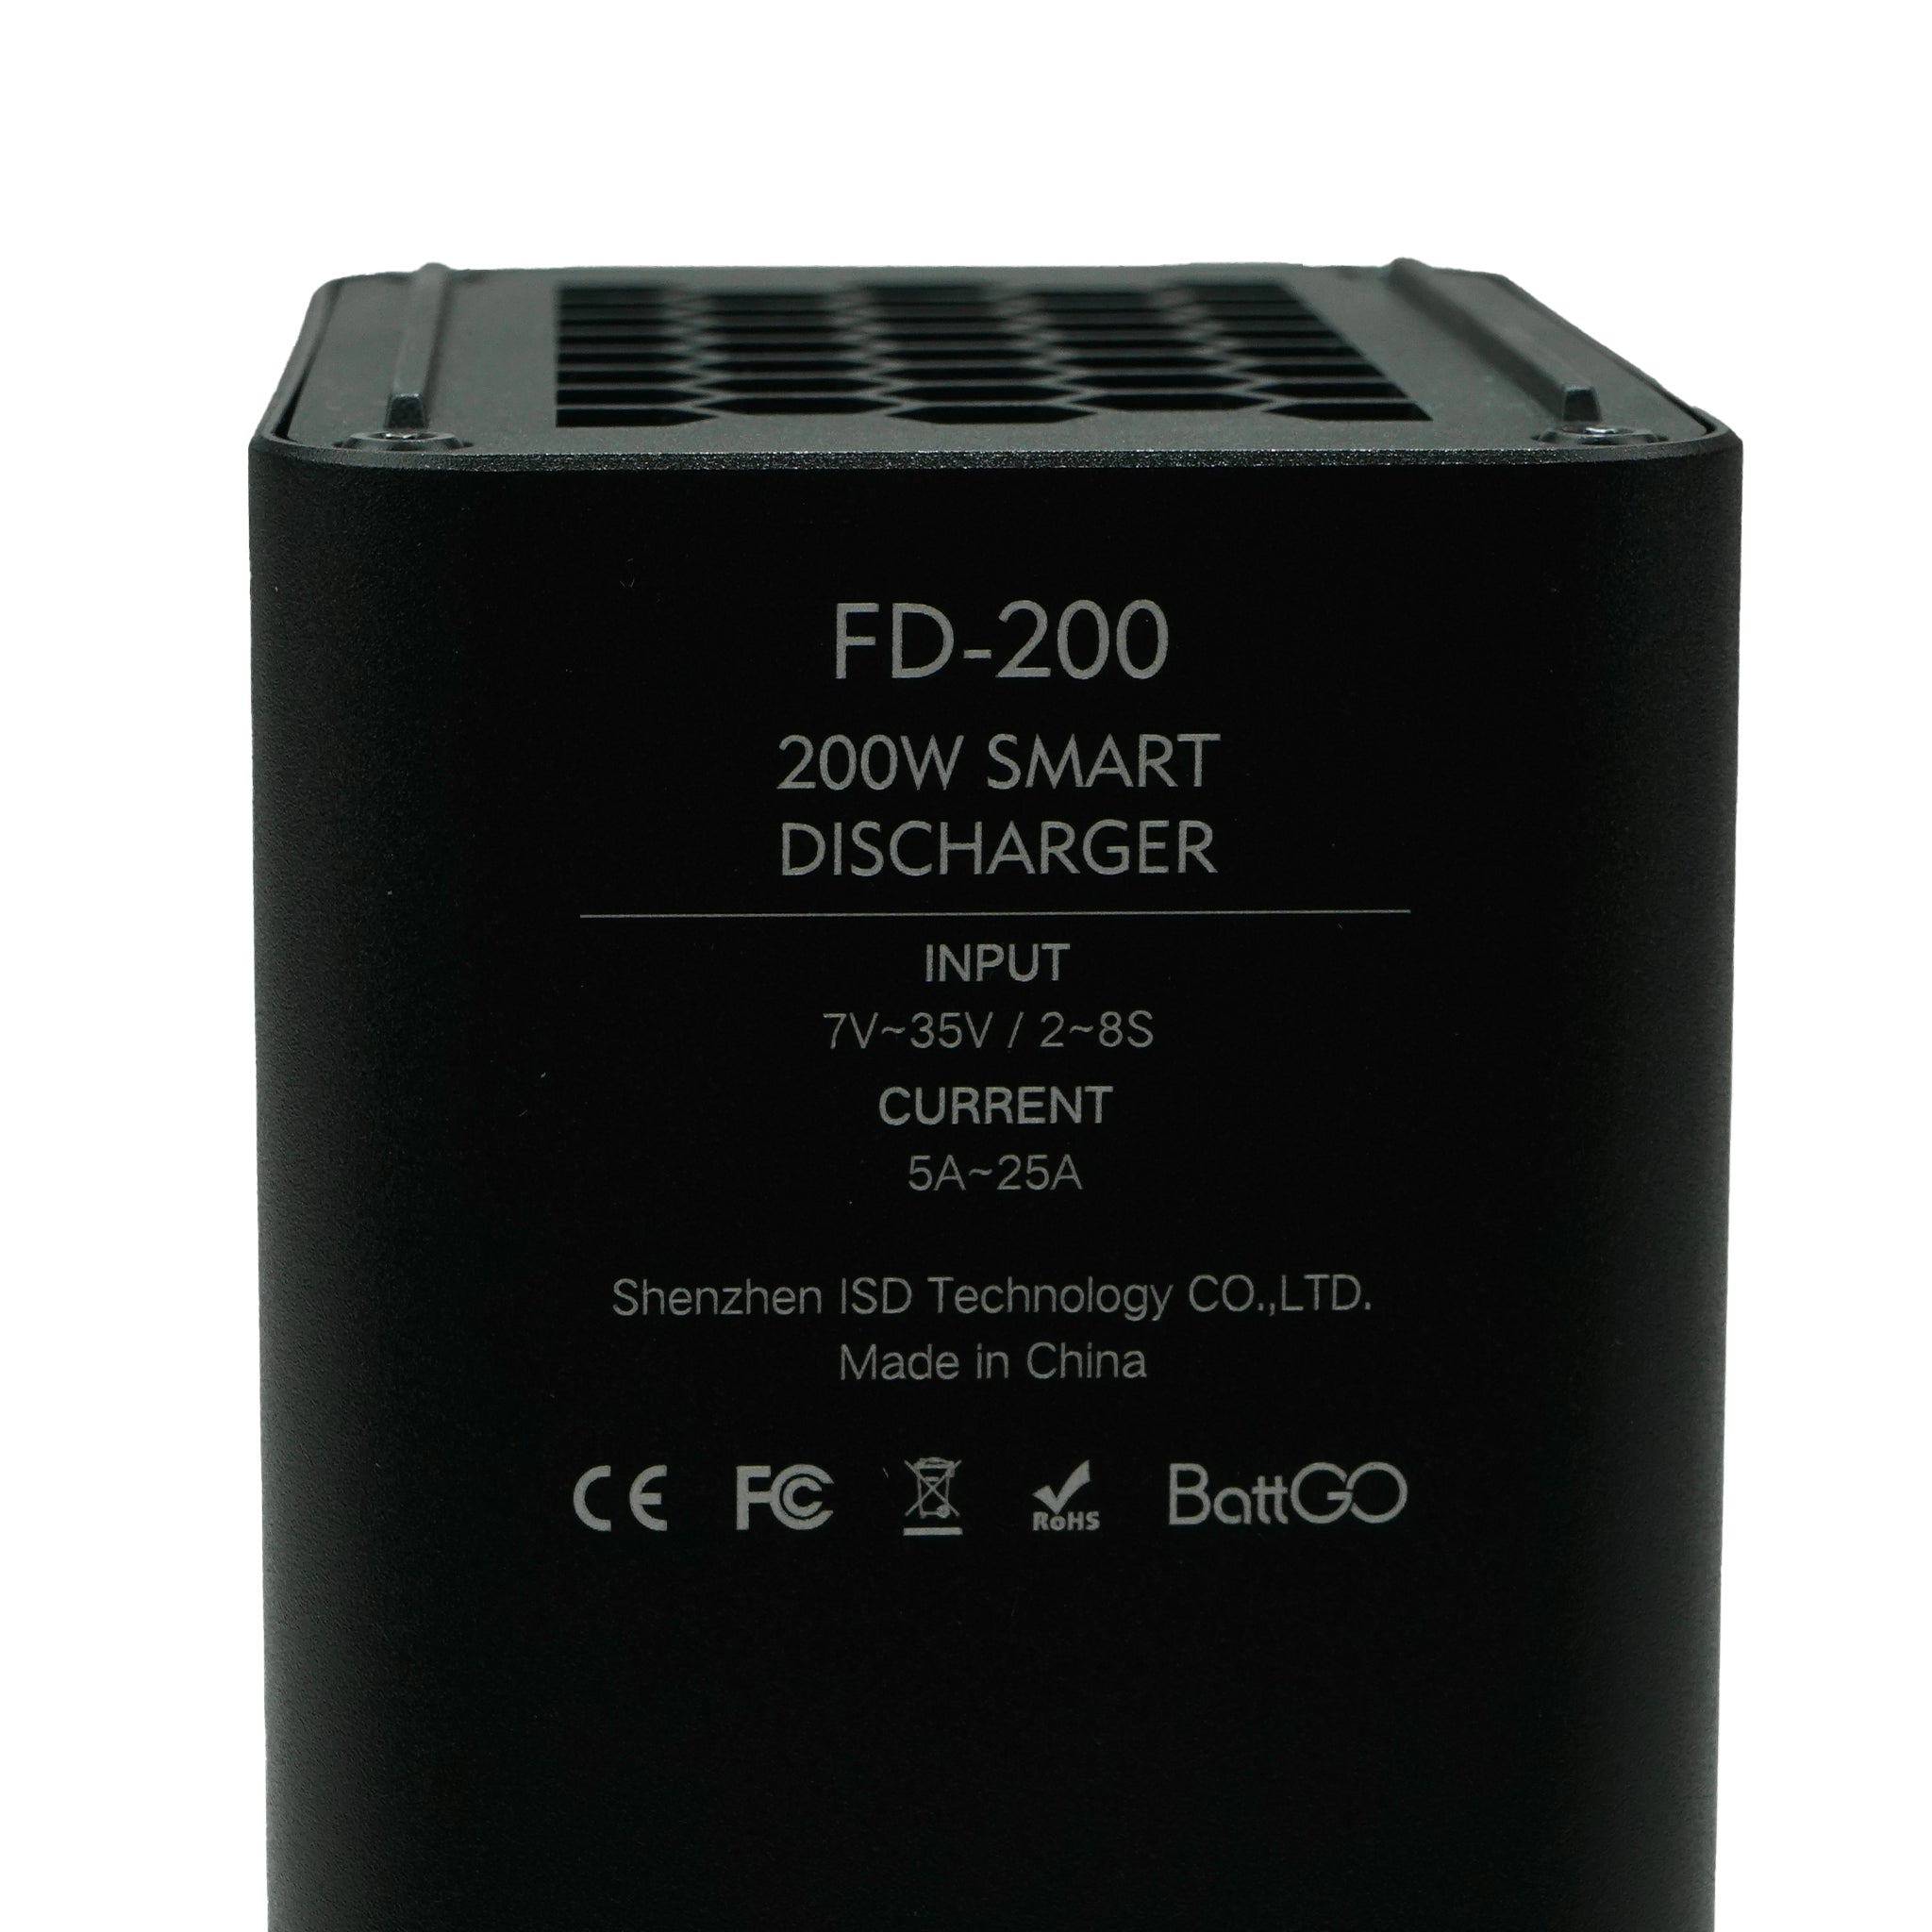 Foil Drive Battery Discharger Device - Gen 1